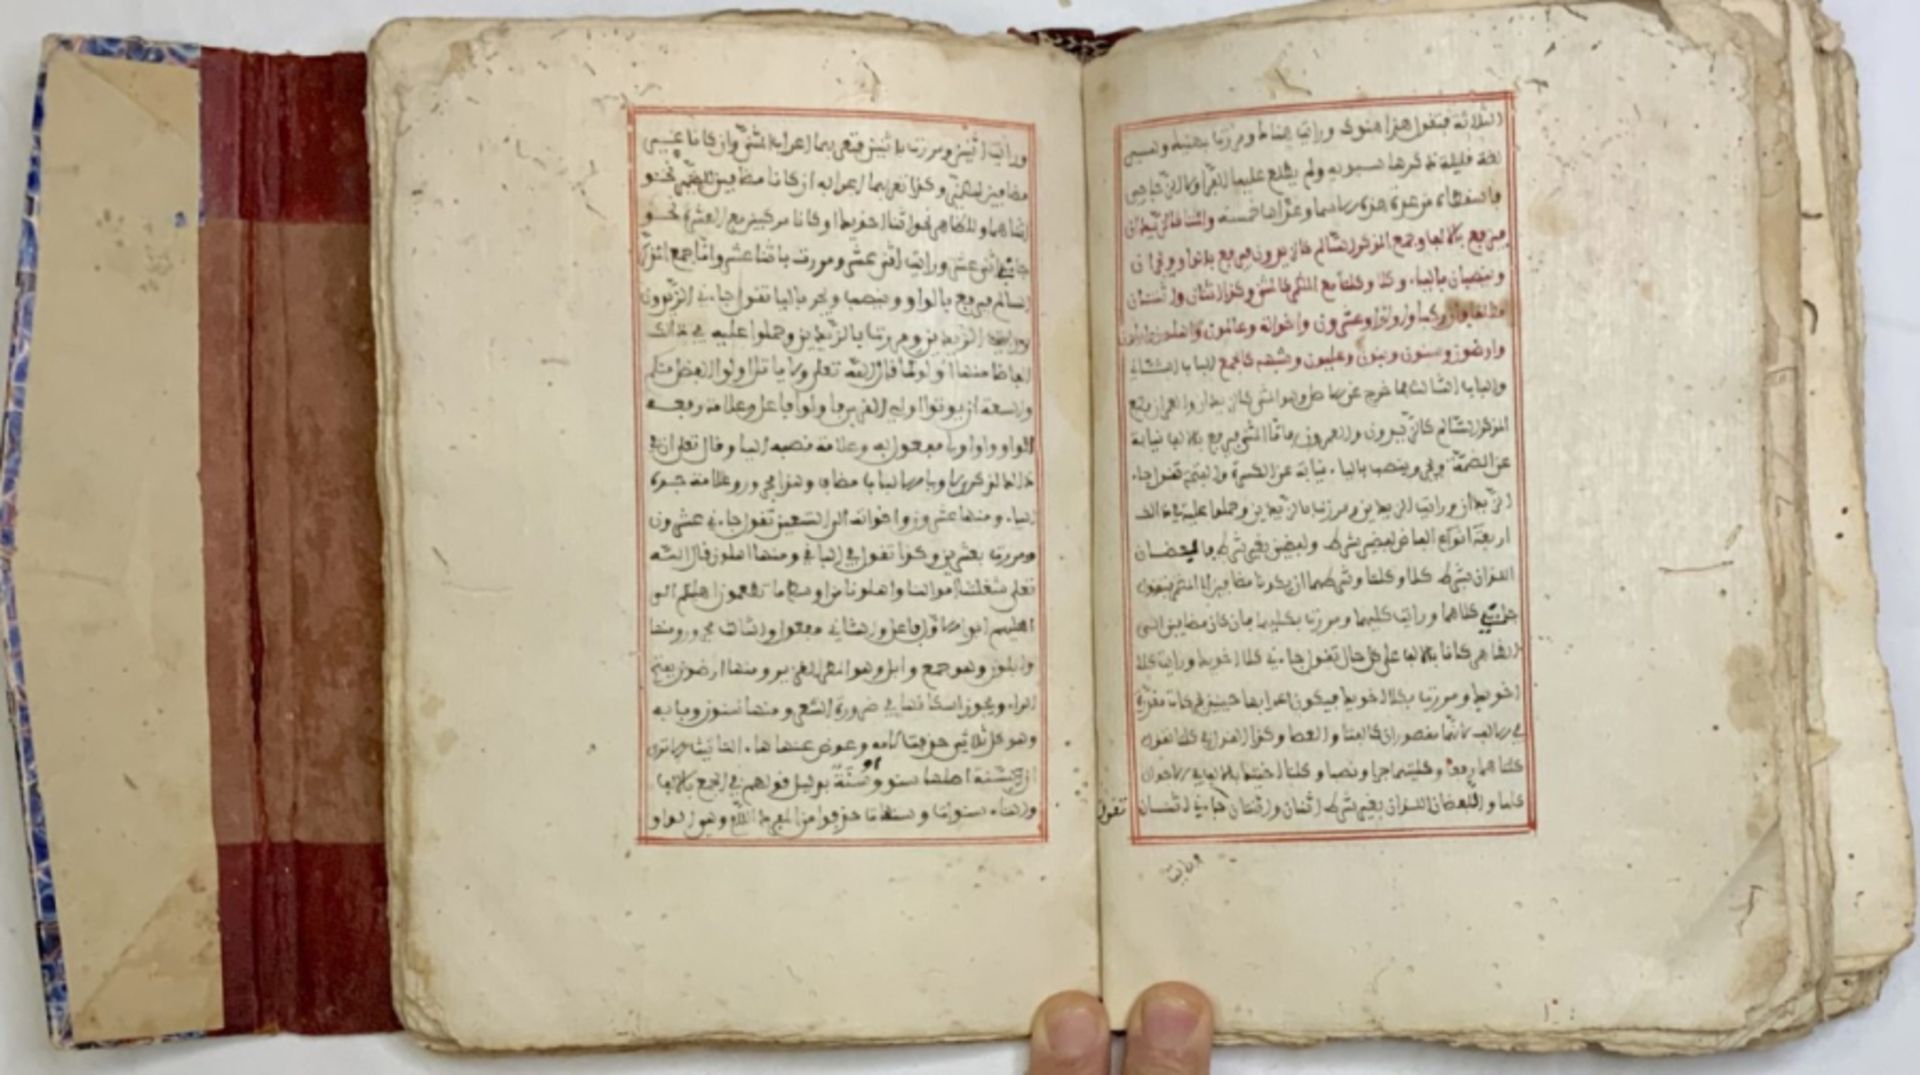 18th century Islamic manuscript on morphology and rhetoric - Image 10 of 18